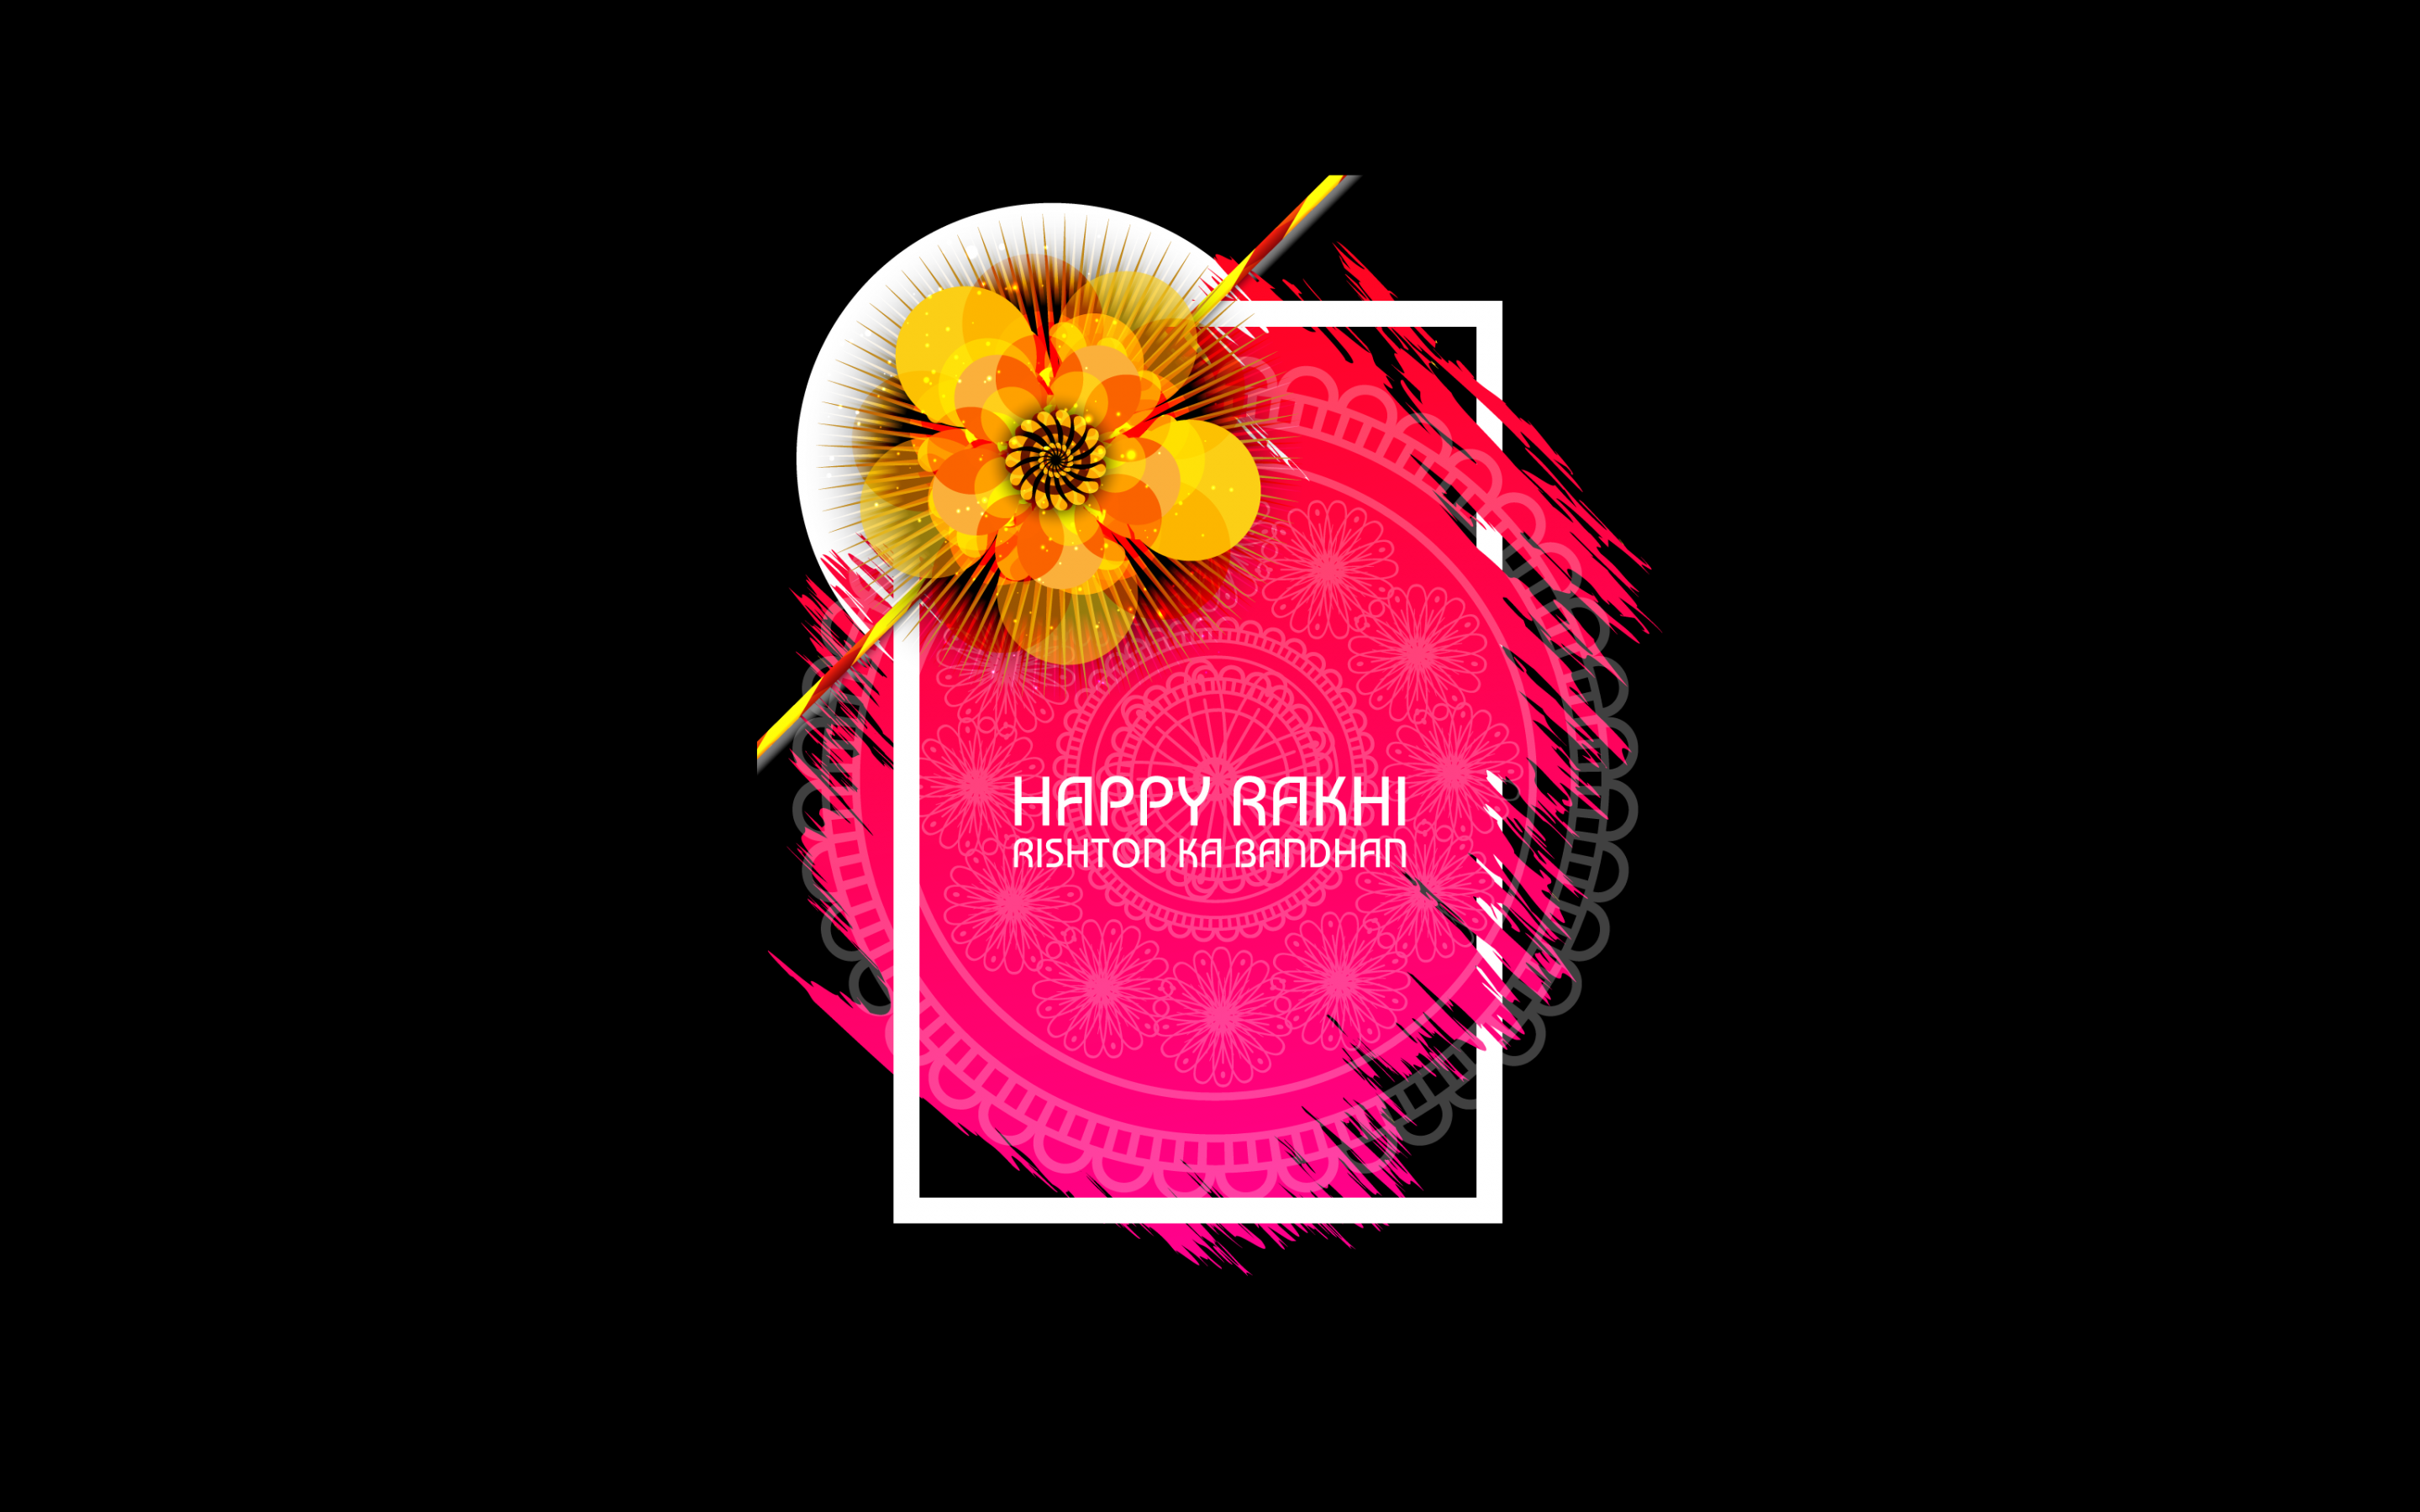 Wallpaper Raksha Bandhan, Happy Rakhi, Hindu festival, Indian festival, 4K, Celebrations / Editor's Picks,. Wallpaper for iPhone, Android, Mobile and Desktop